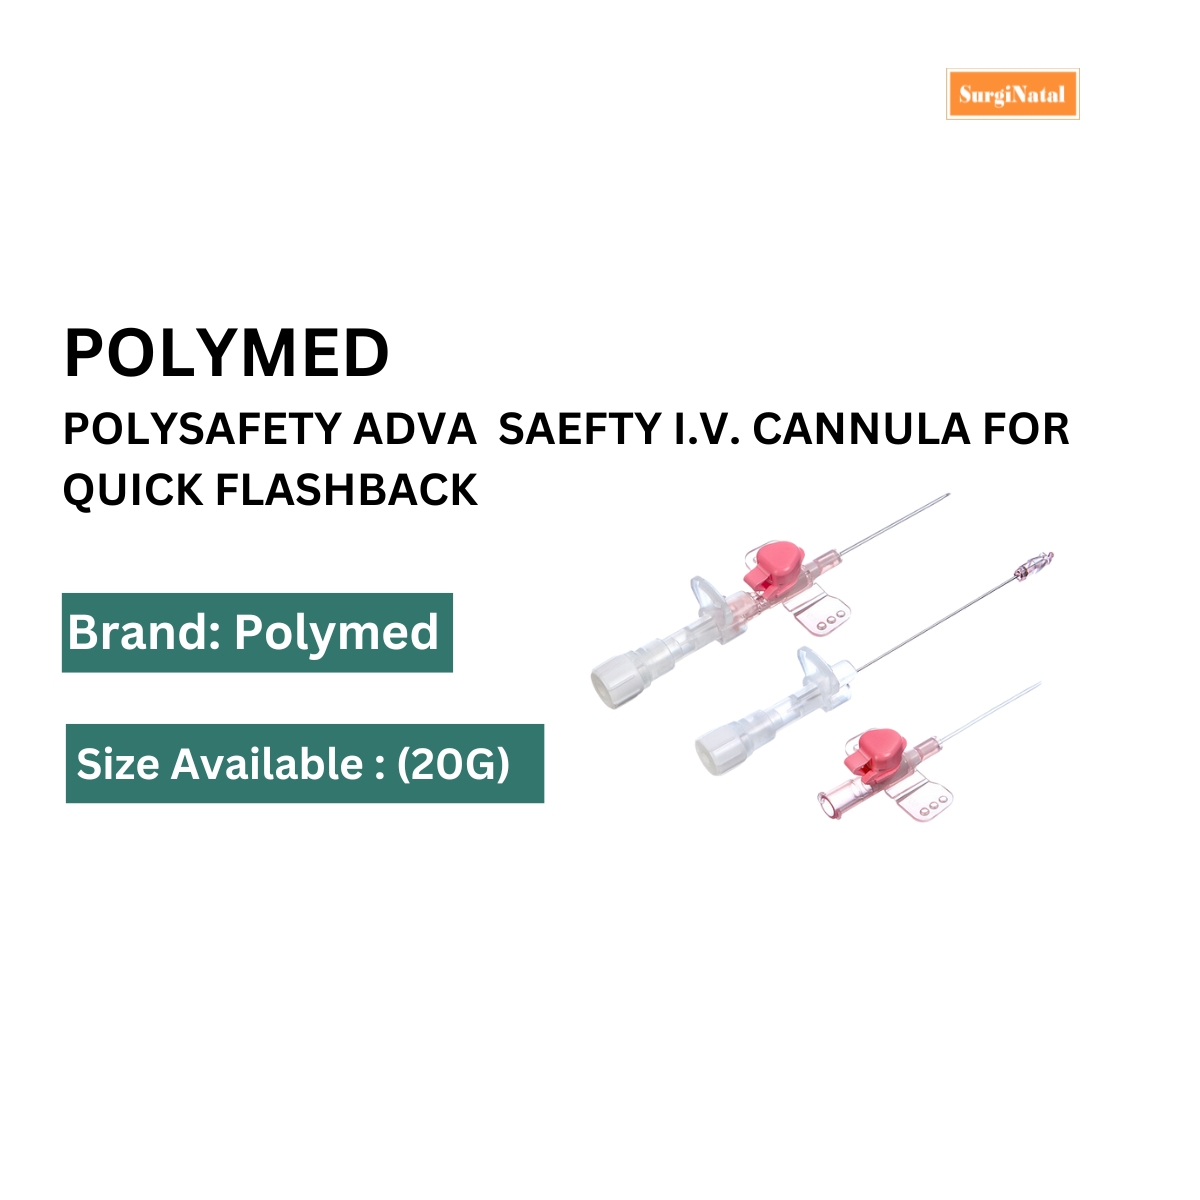  cannula with adva needle technology